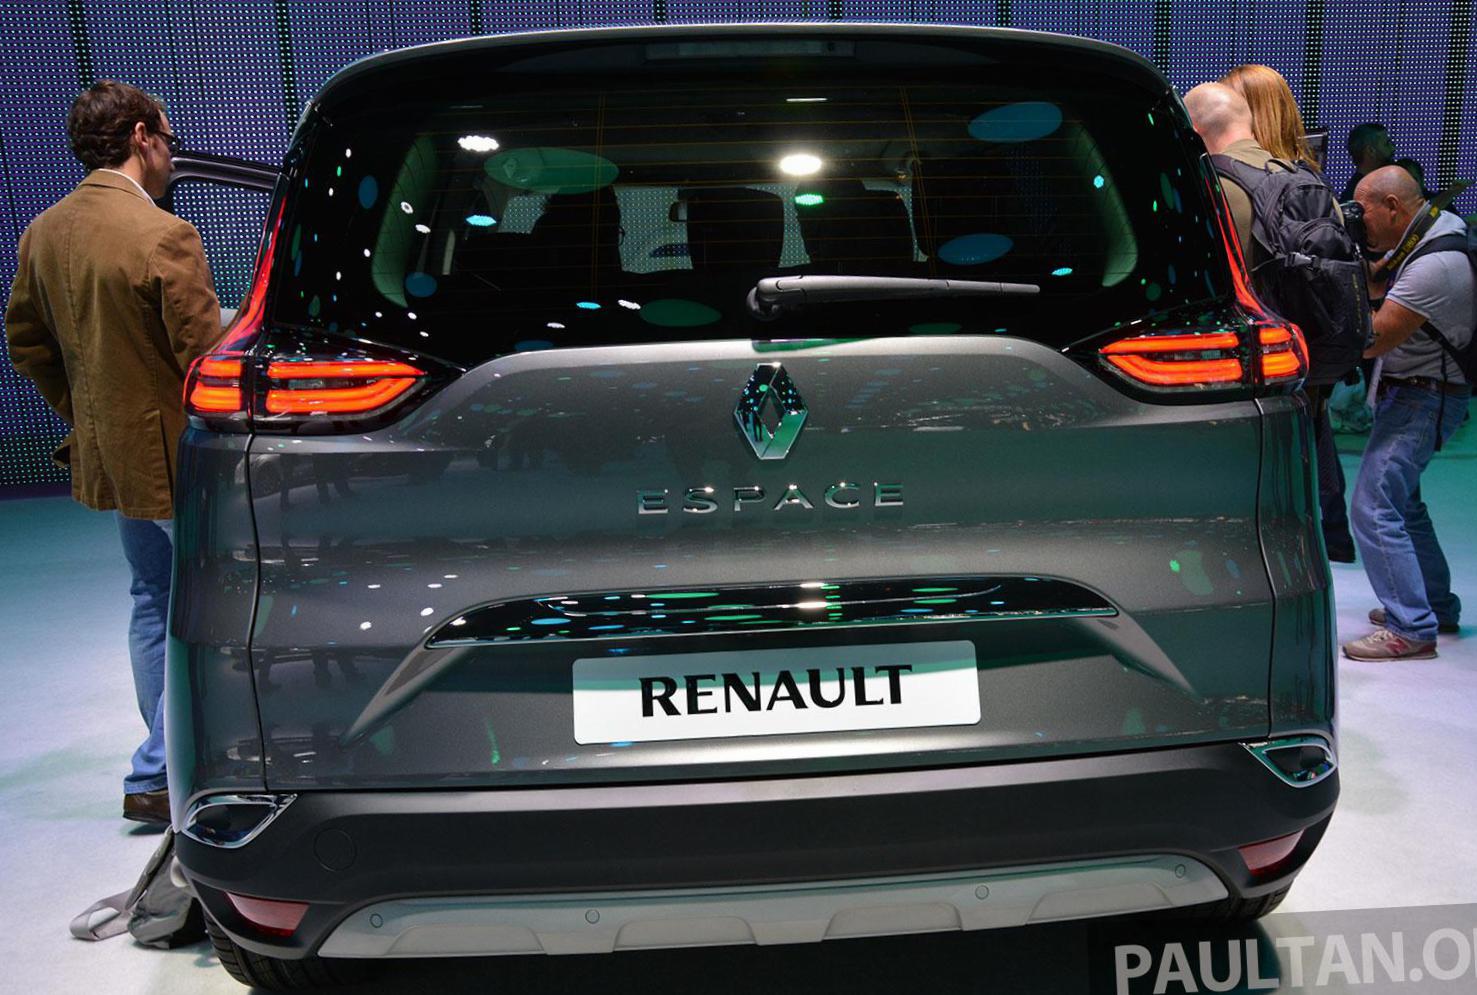 Renault Espace used minivan